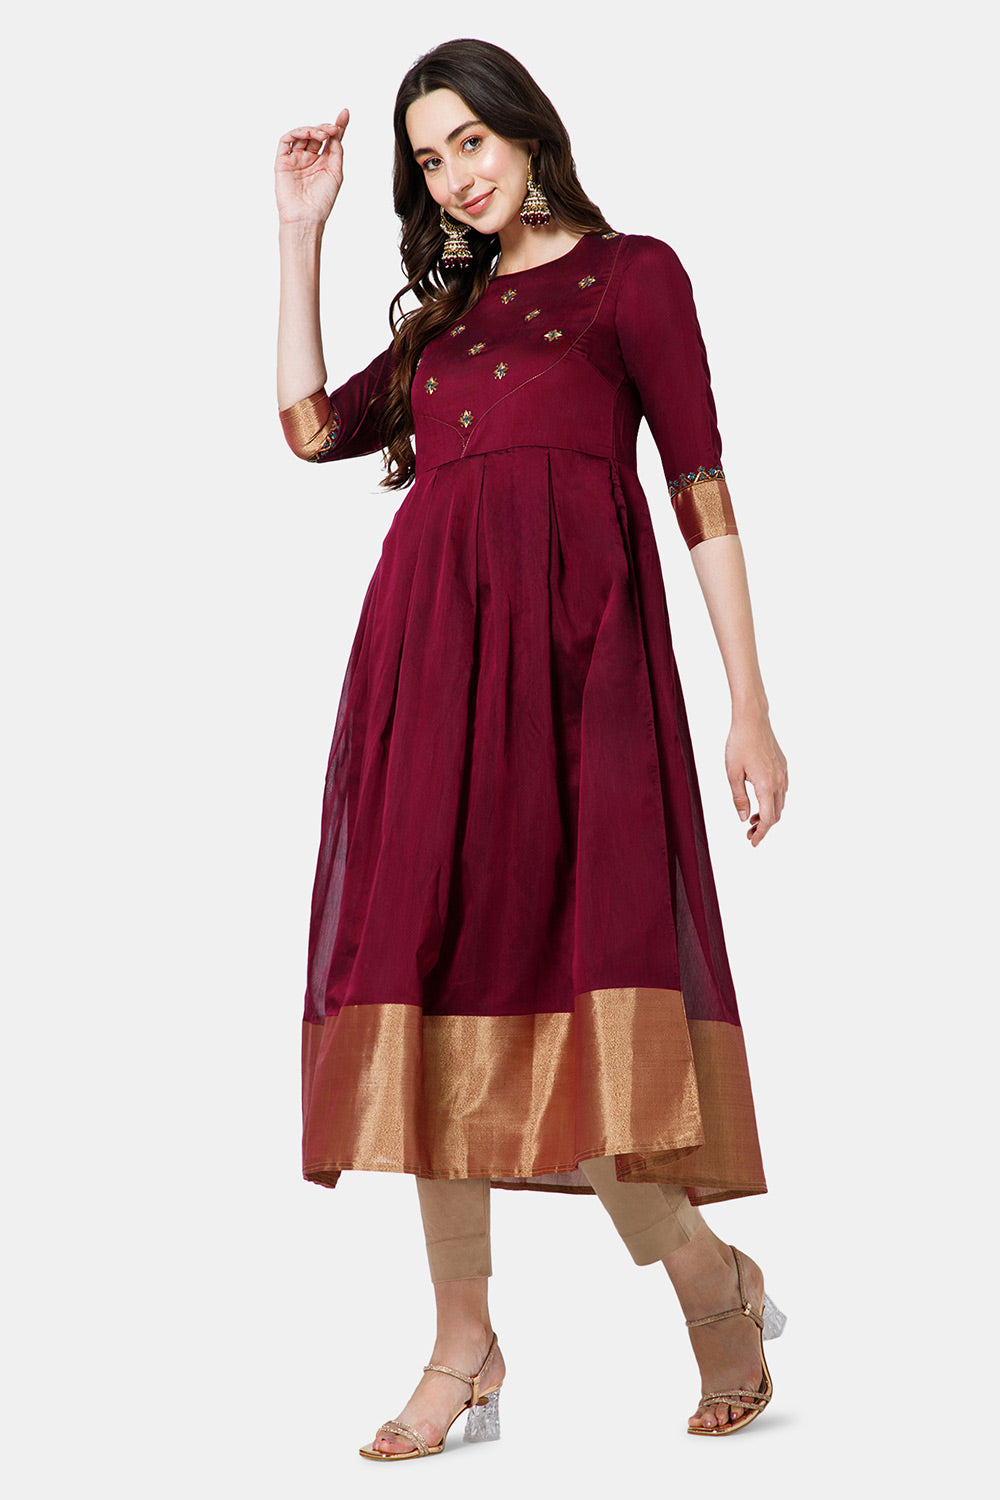 Mythri Women's Ethnic Wear Round Neck Anarkali dress with 3/4 sleeve - Purple - KU49